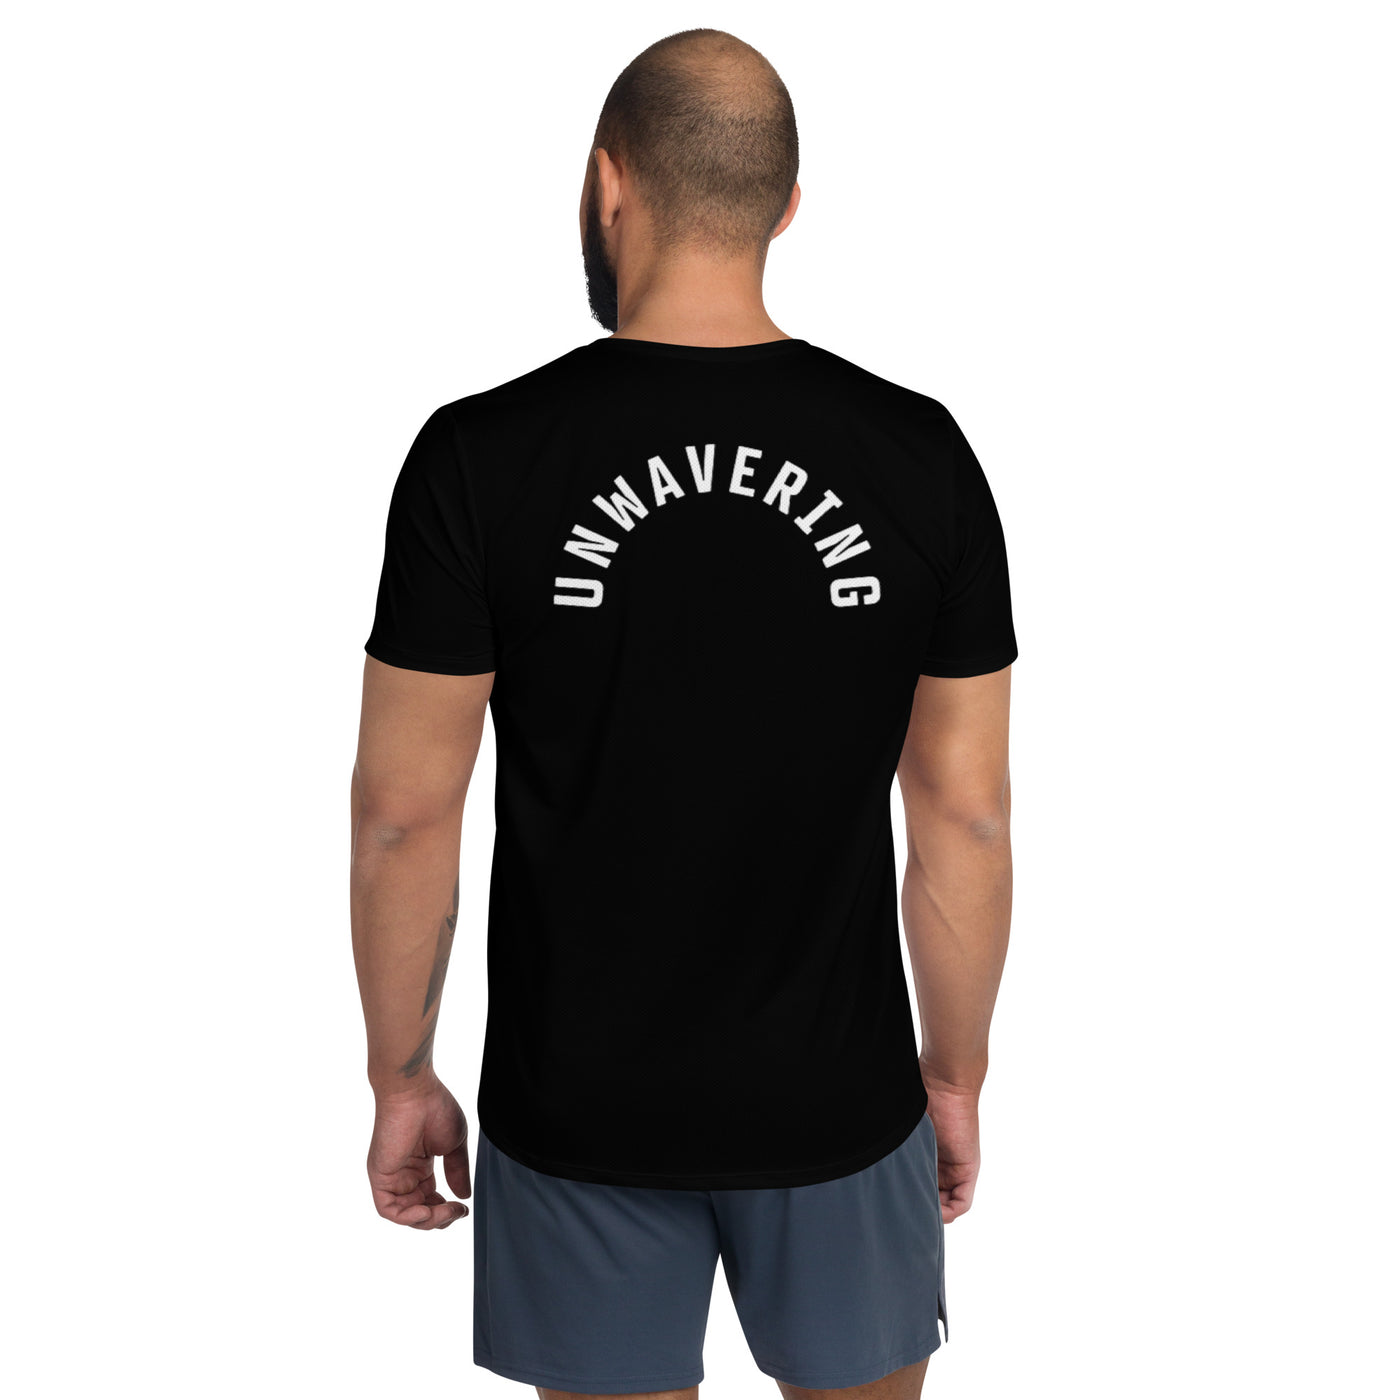 UNWAVERING Male  Athletic T-shirt